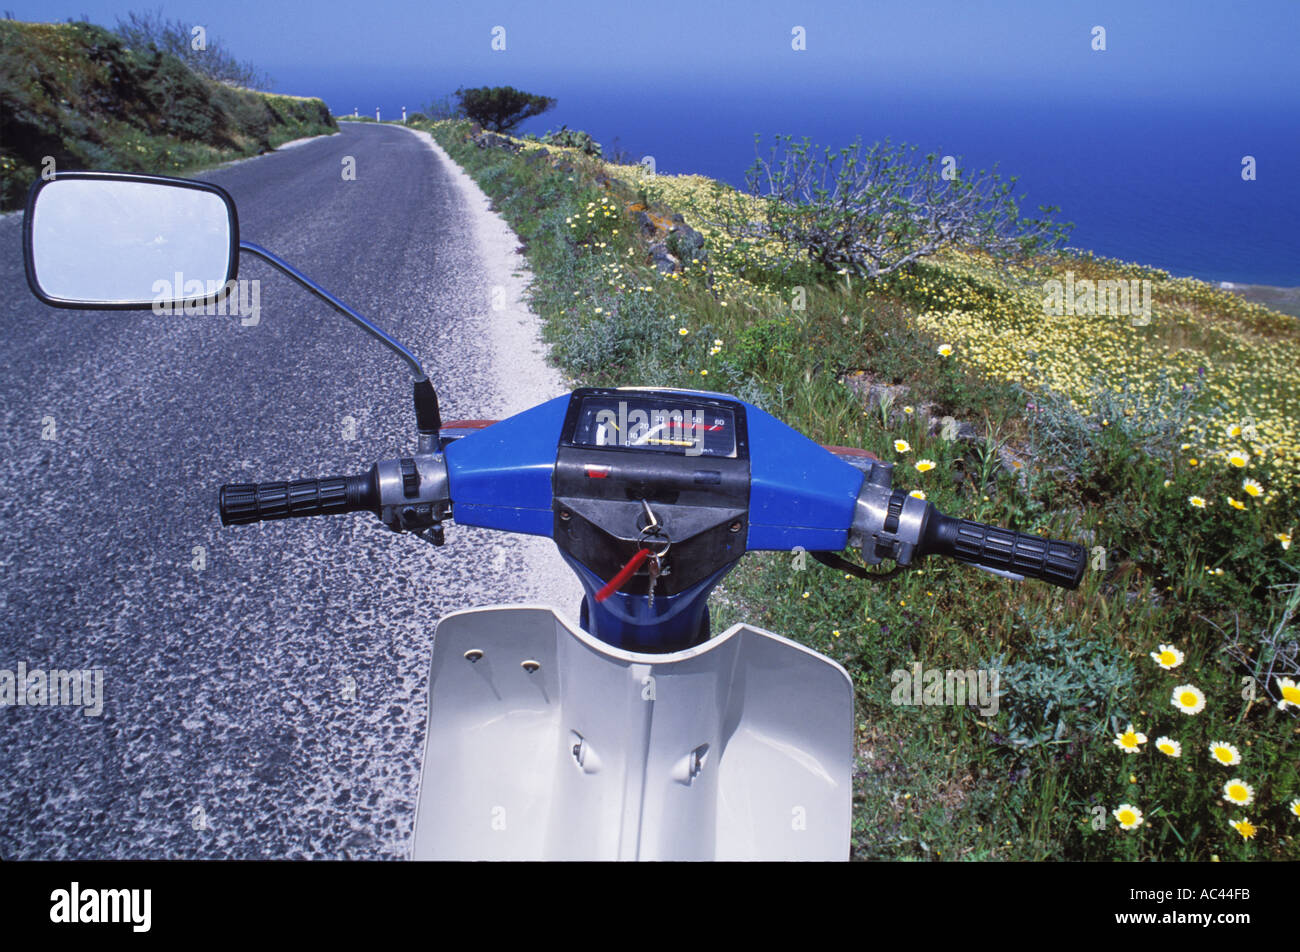 Santorini roller -Fotos und -Bildmaterial in hoher Auflösung – Alamy